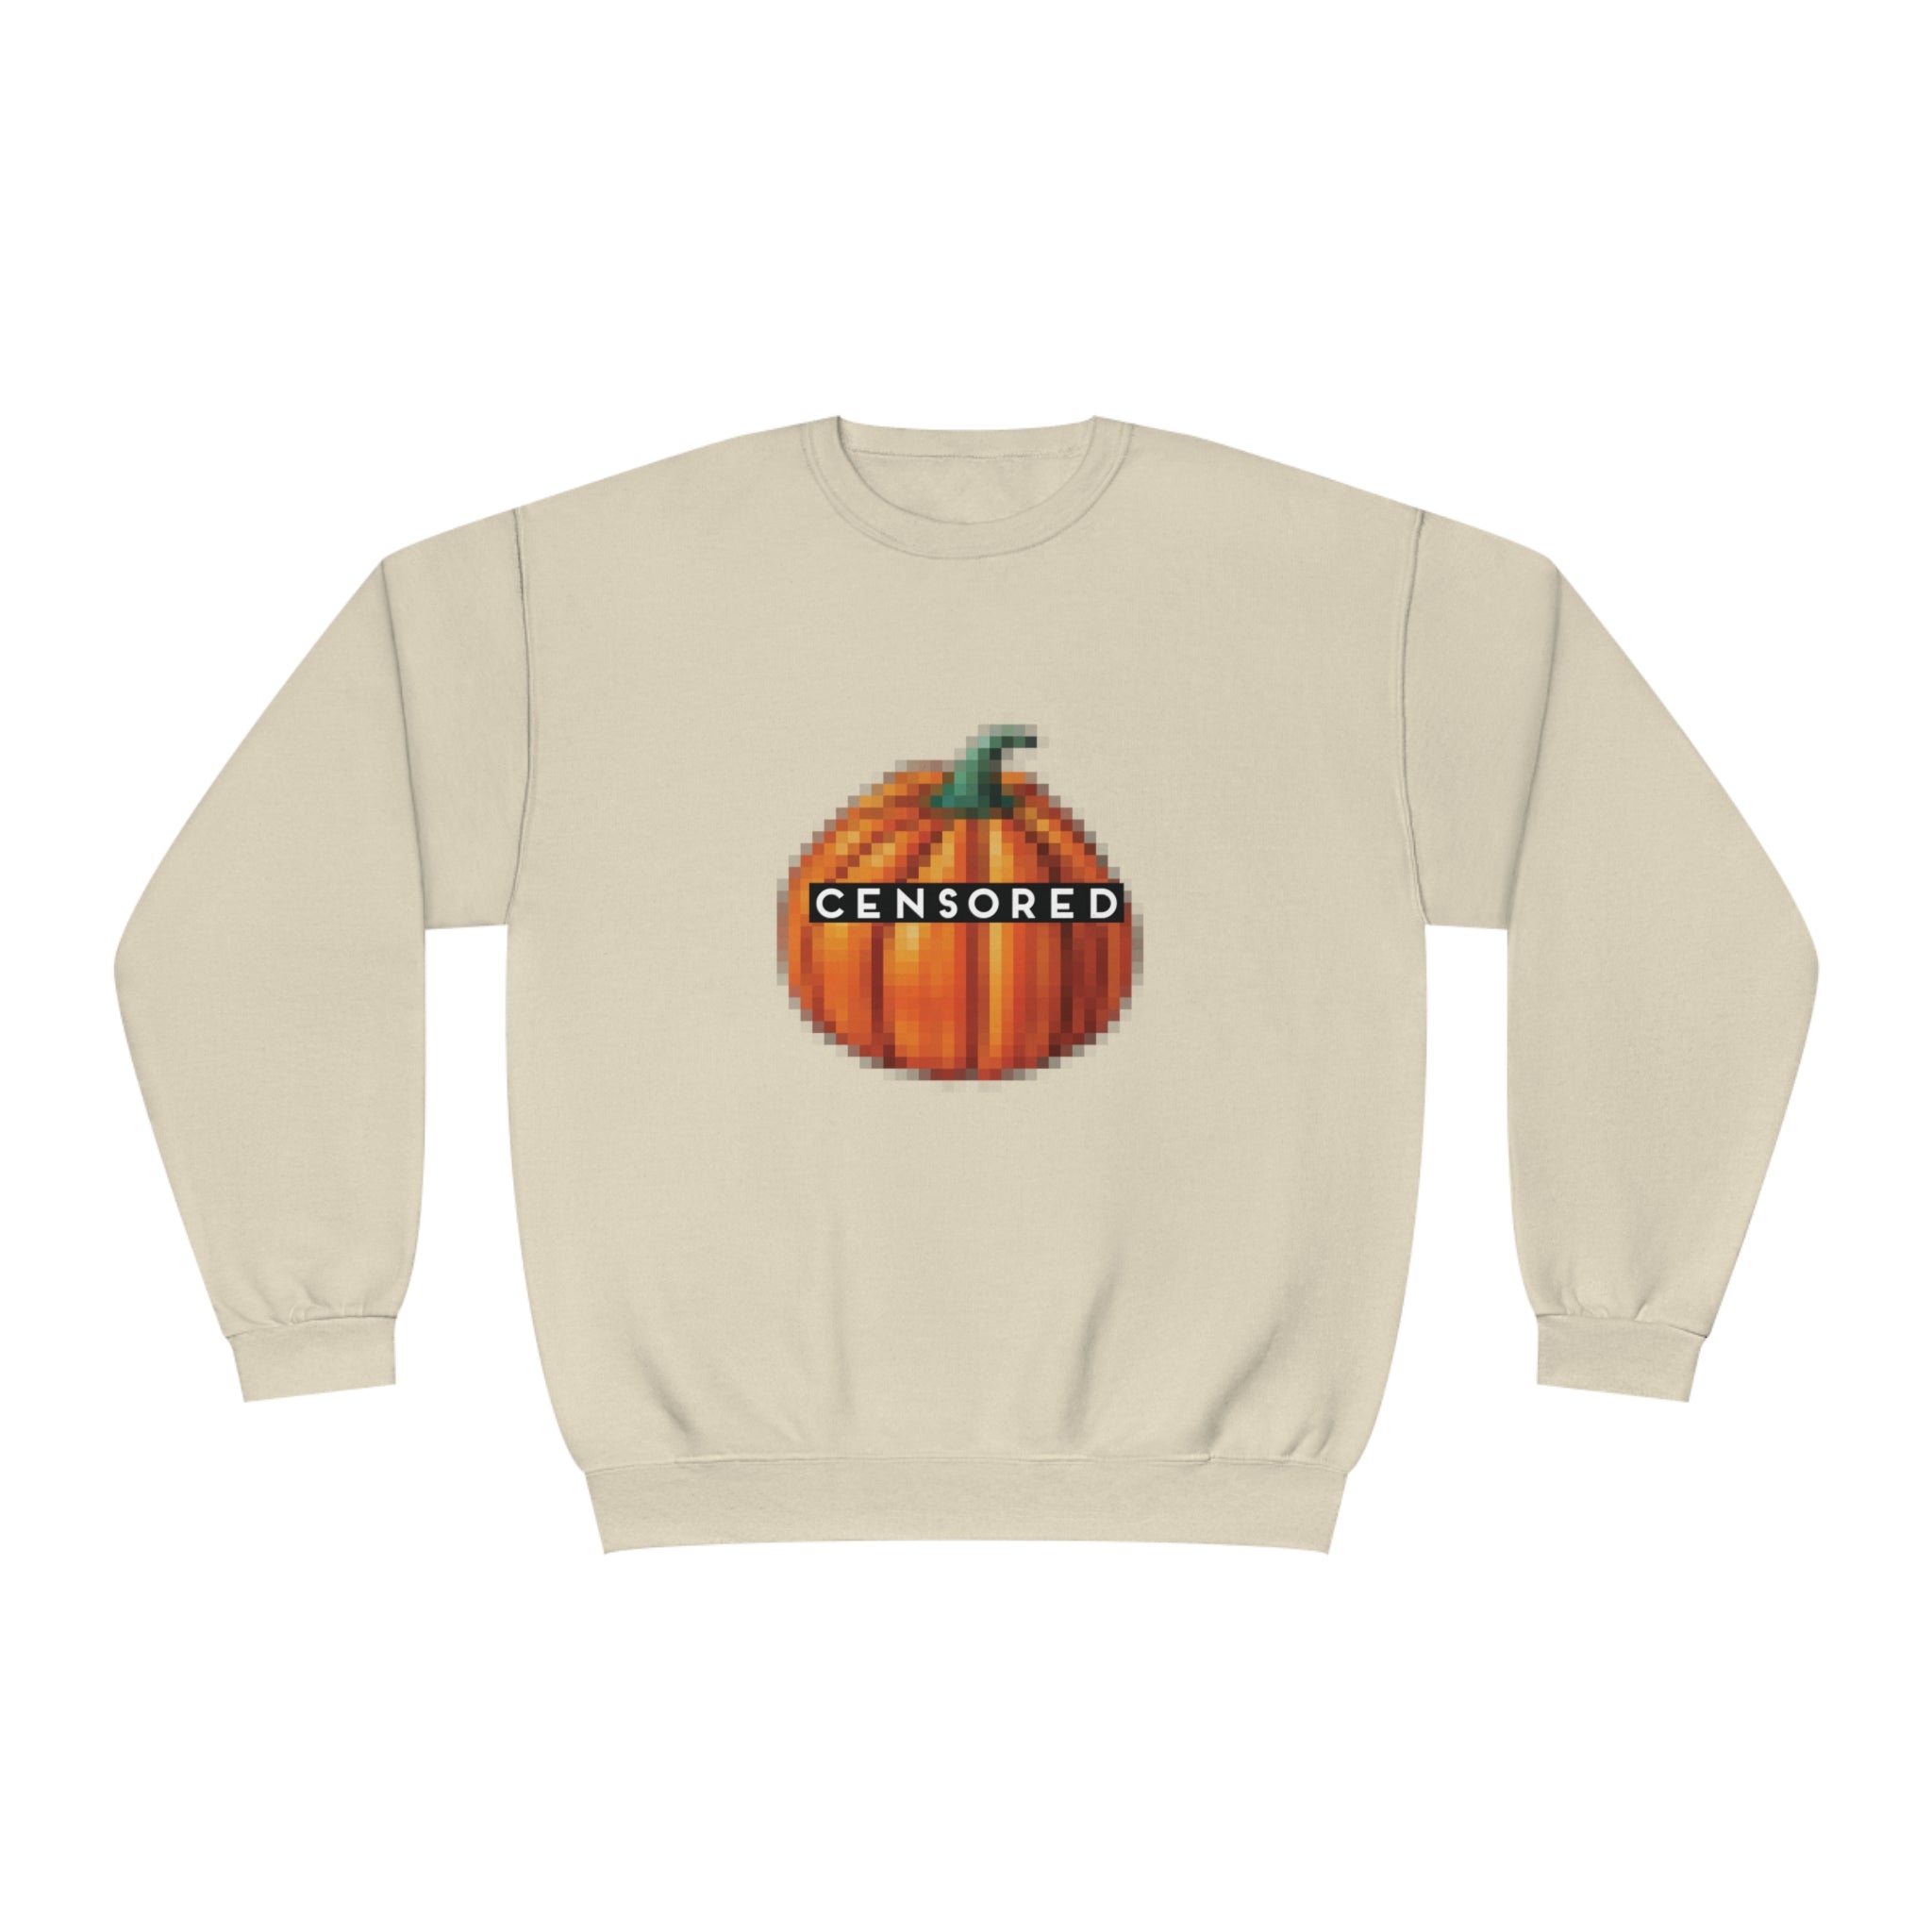 Stop Looking at my Pumpkin Sweatshirt